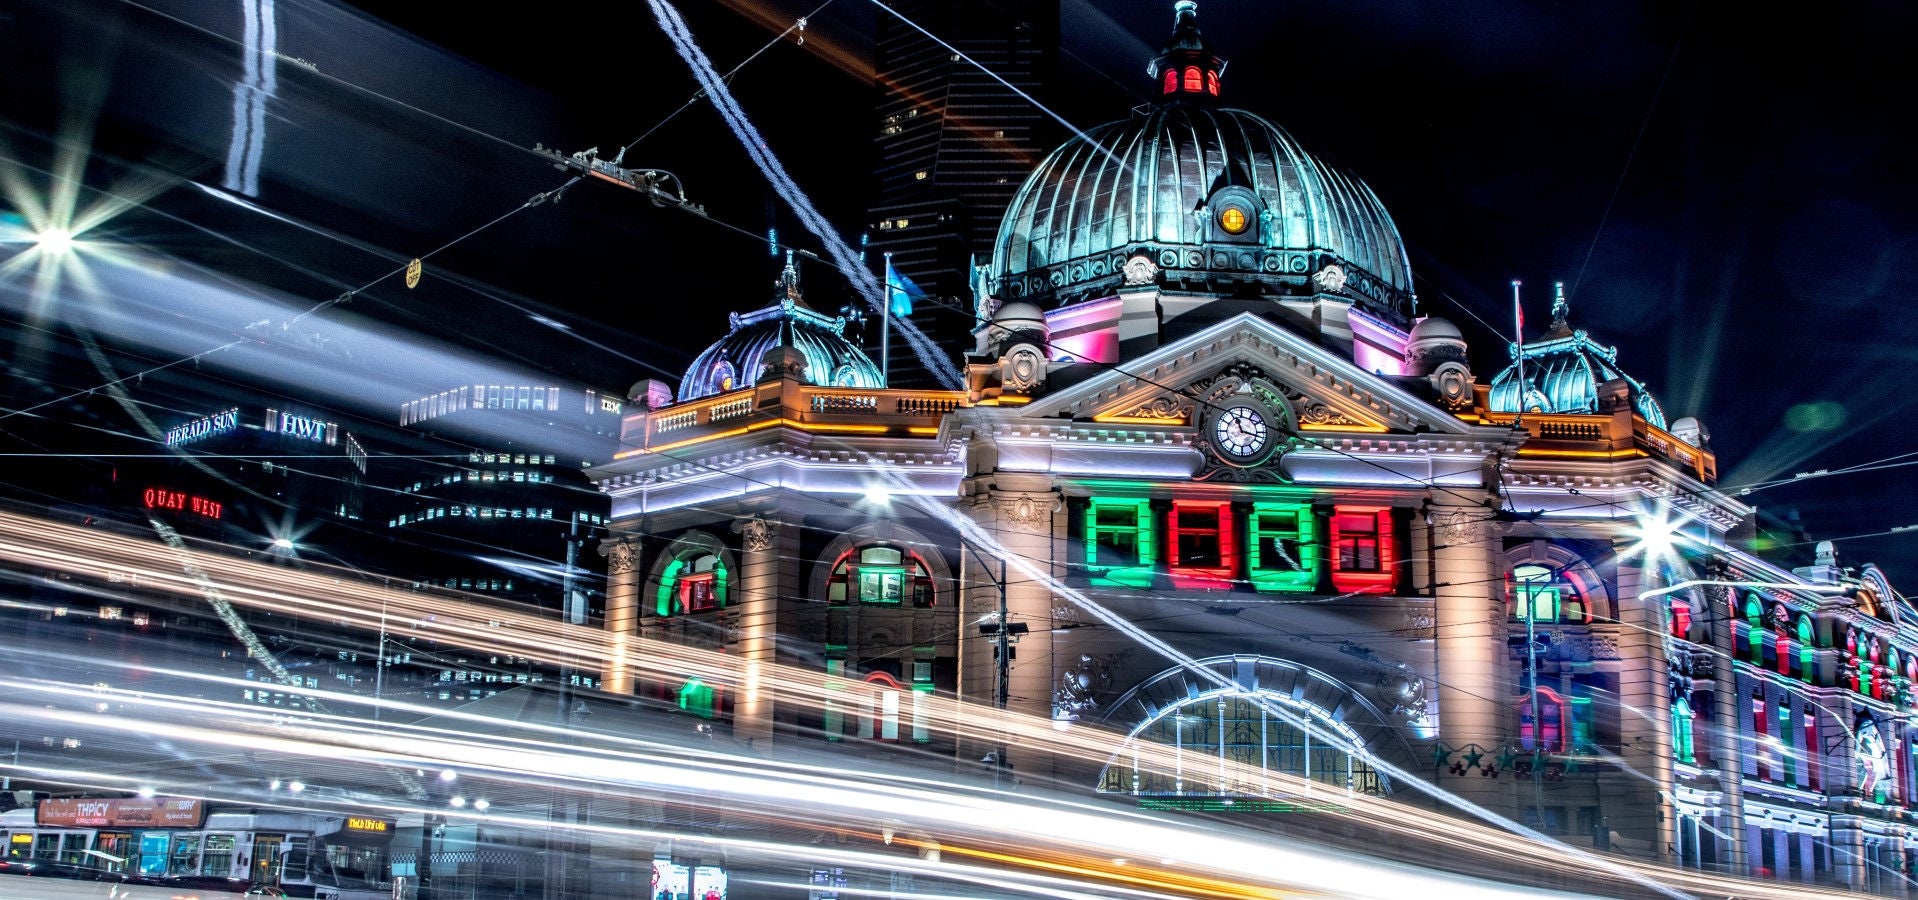 A timelapse night photo of Flinders Street Station, Melbourne